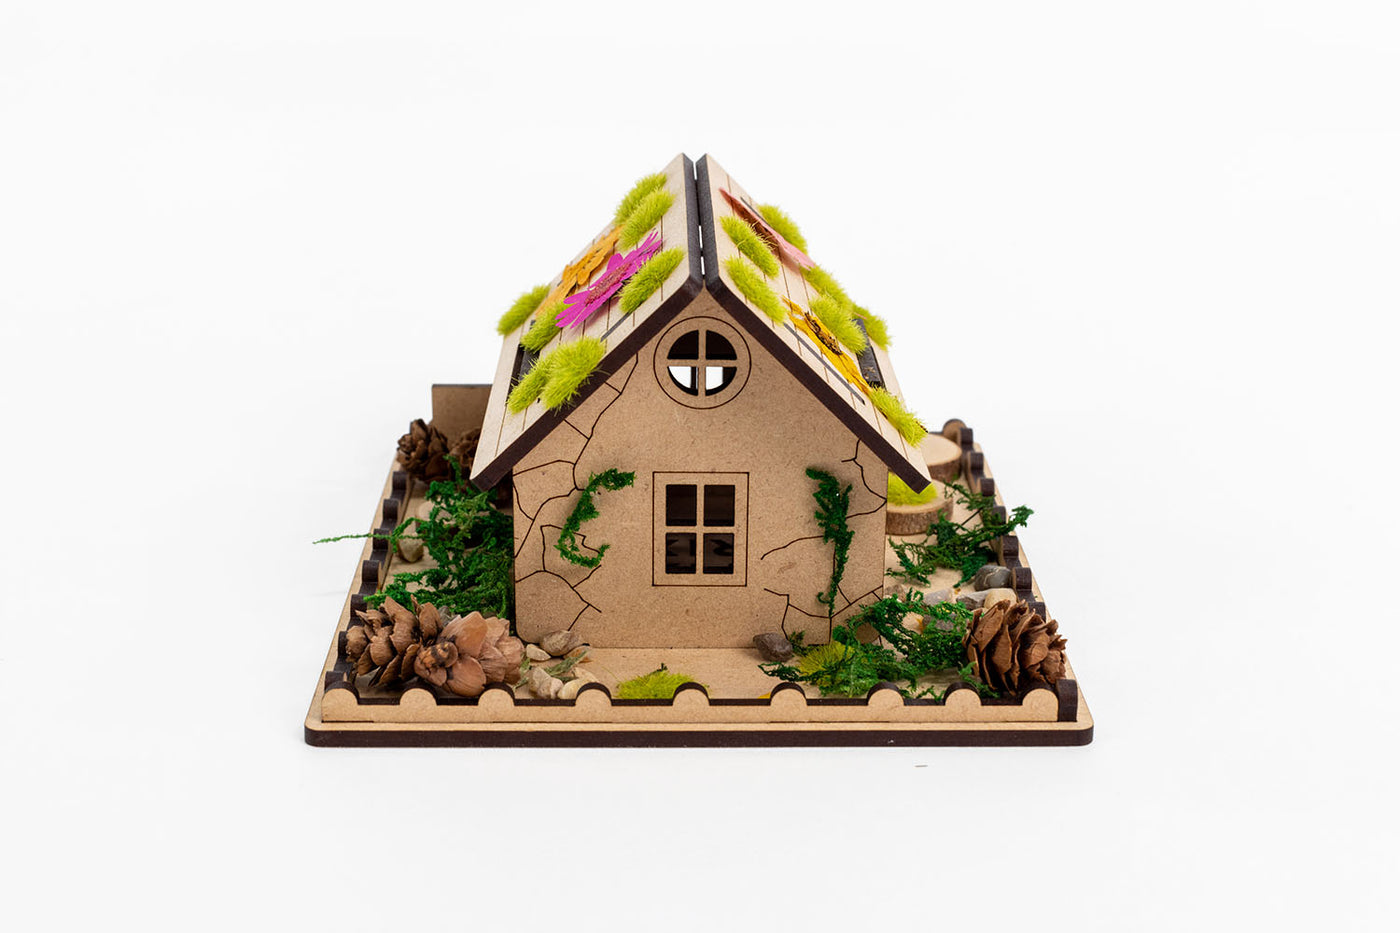 stix+brix fairy house architecture kit for kids